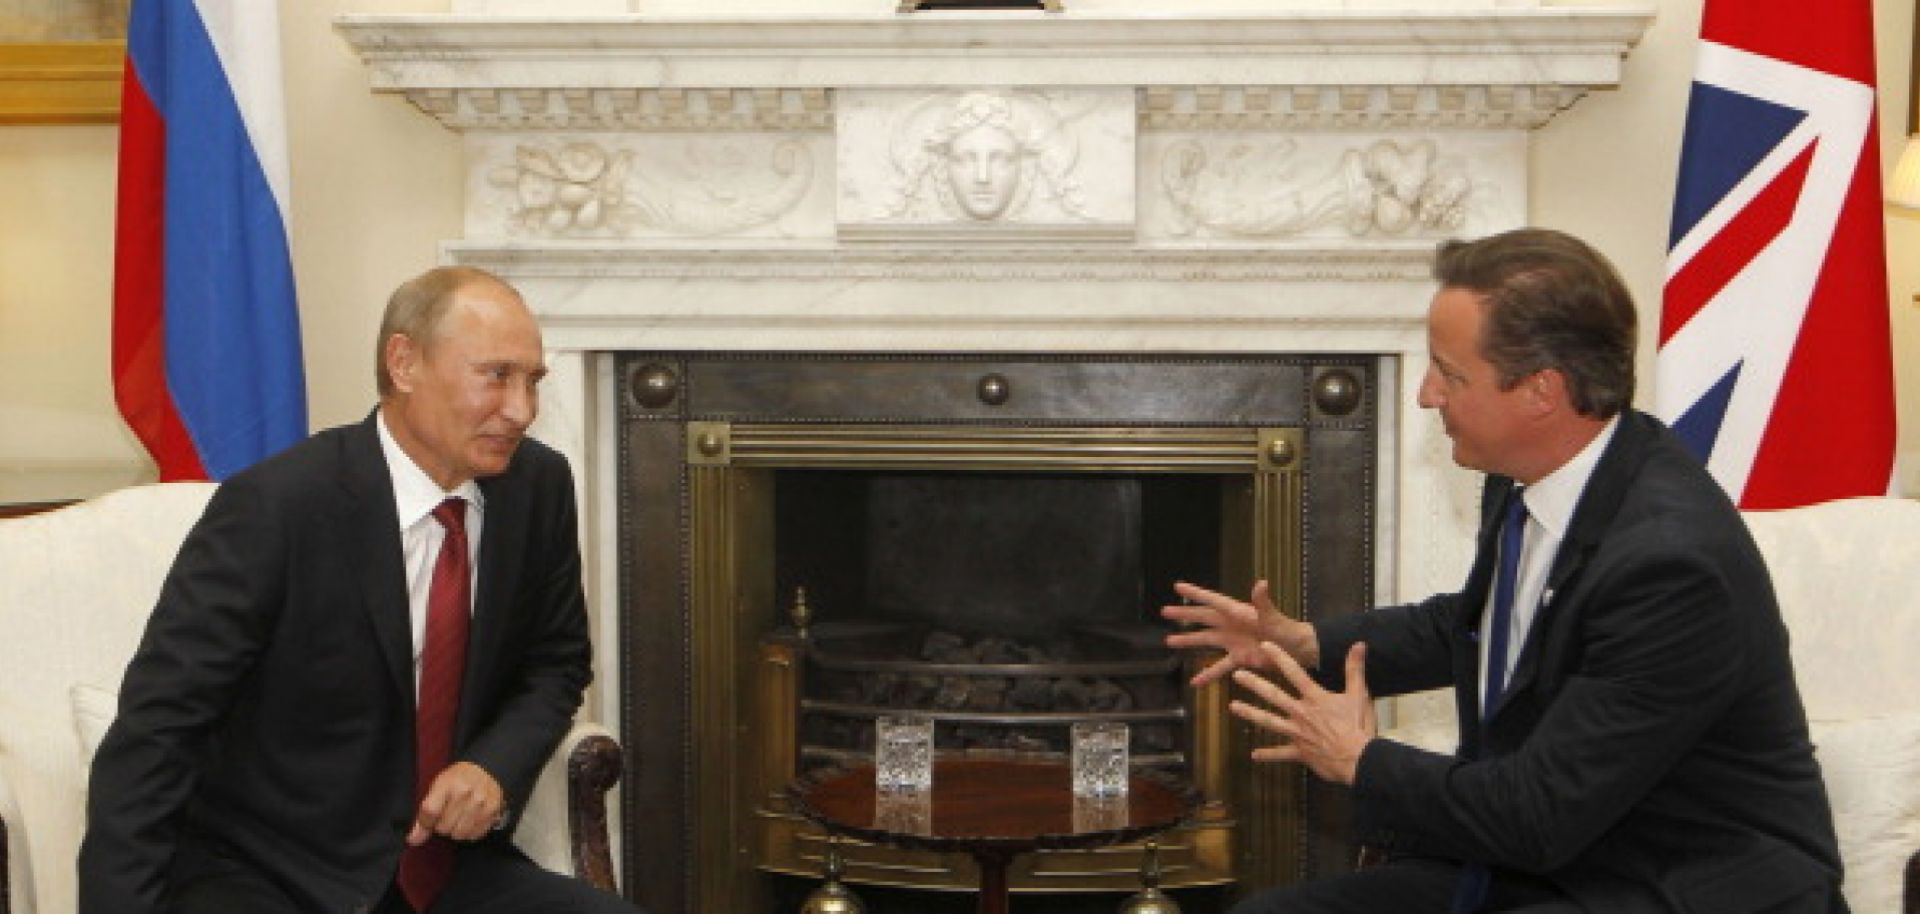 Russian President Vladimir Putin (L) and British Prime Minister David Cameron in London on Aug. 2, 2012